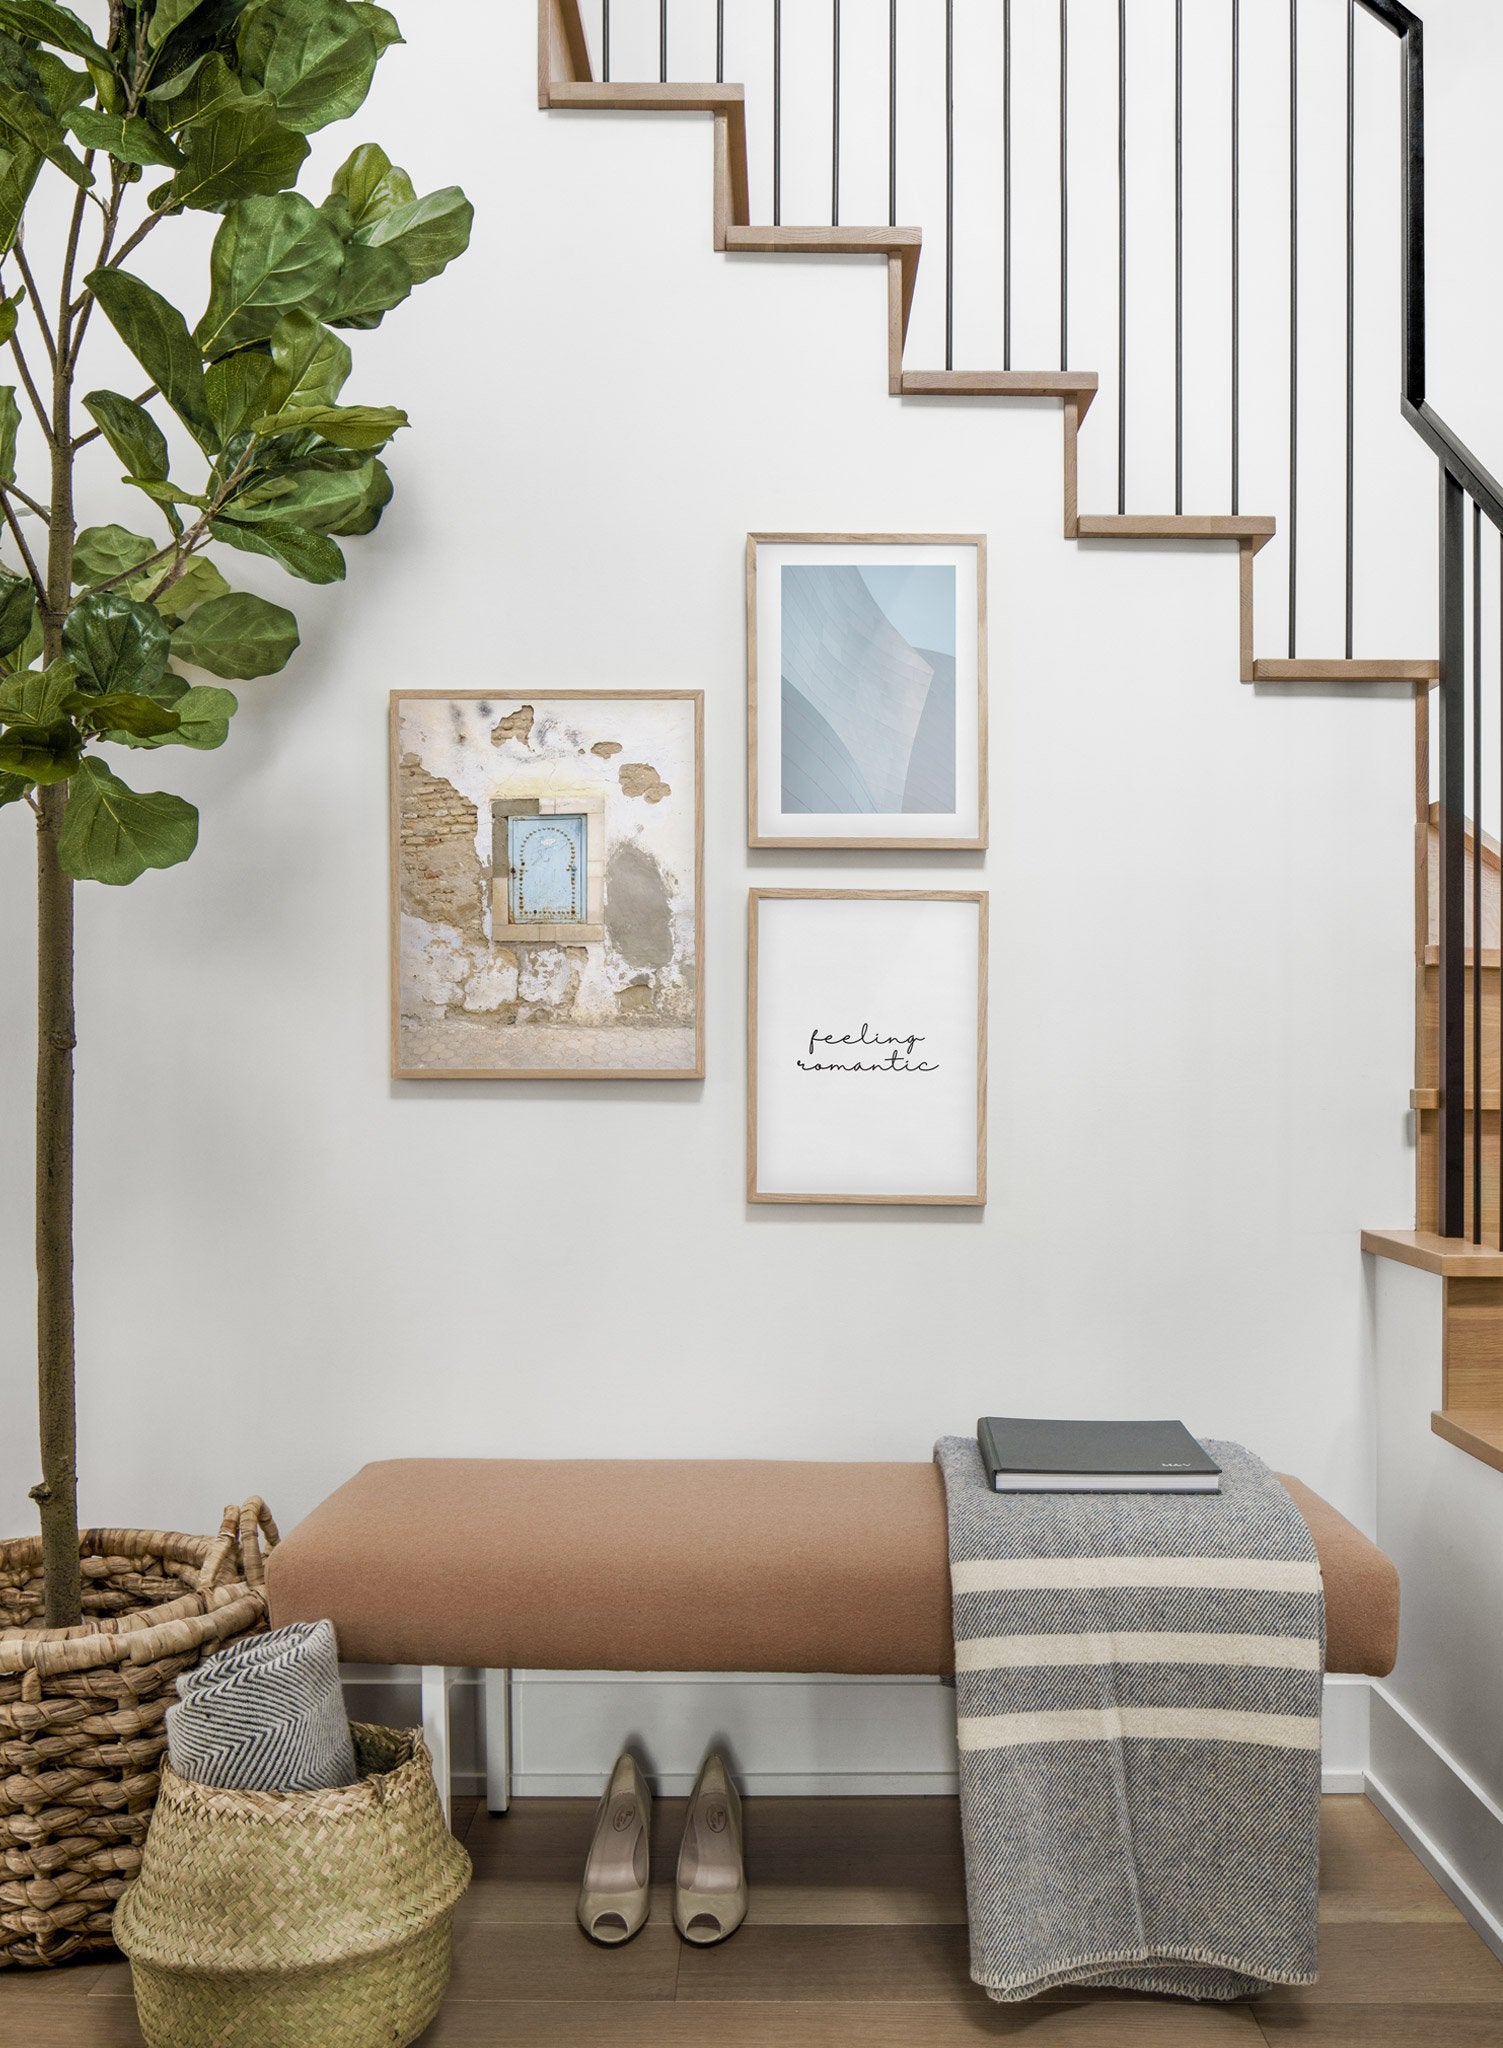 Moorish Window modern minimalist photography poster by Opposite Wall - Hallway - Trio - Staircase